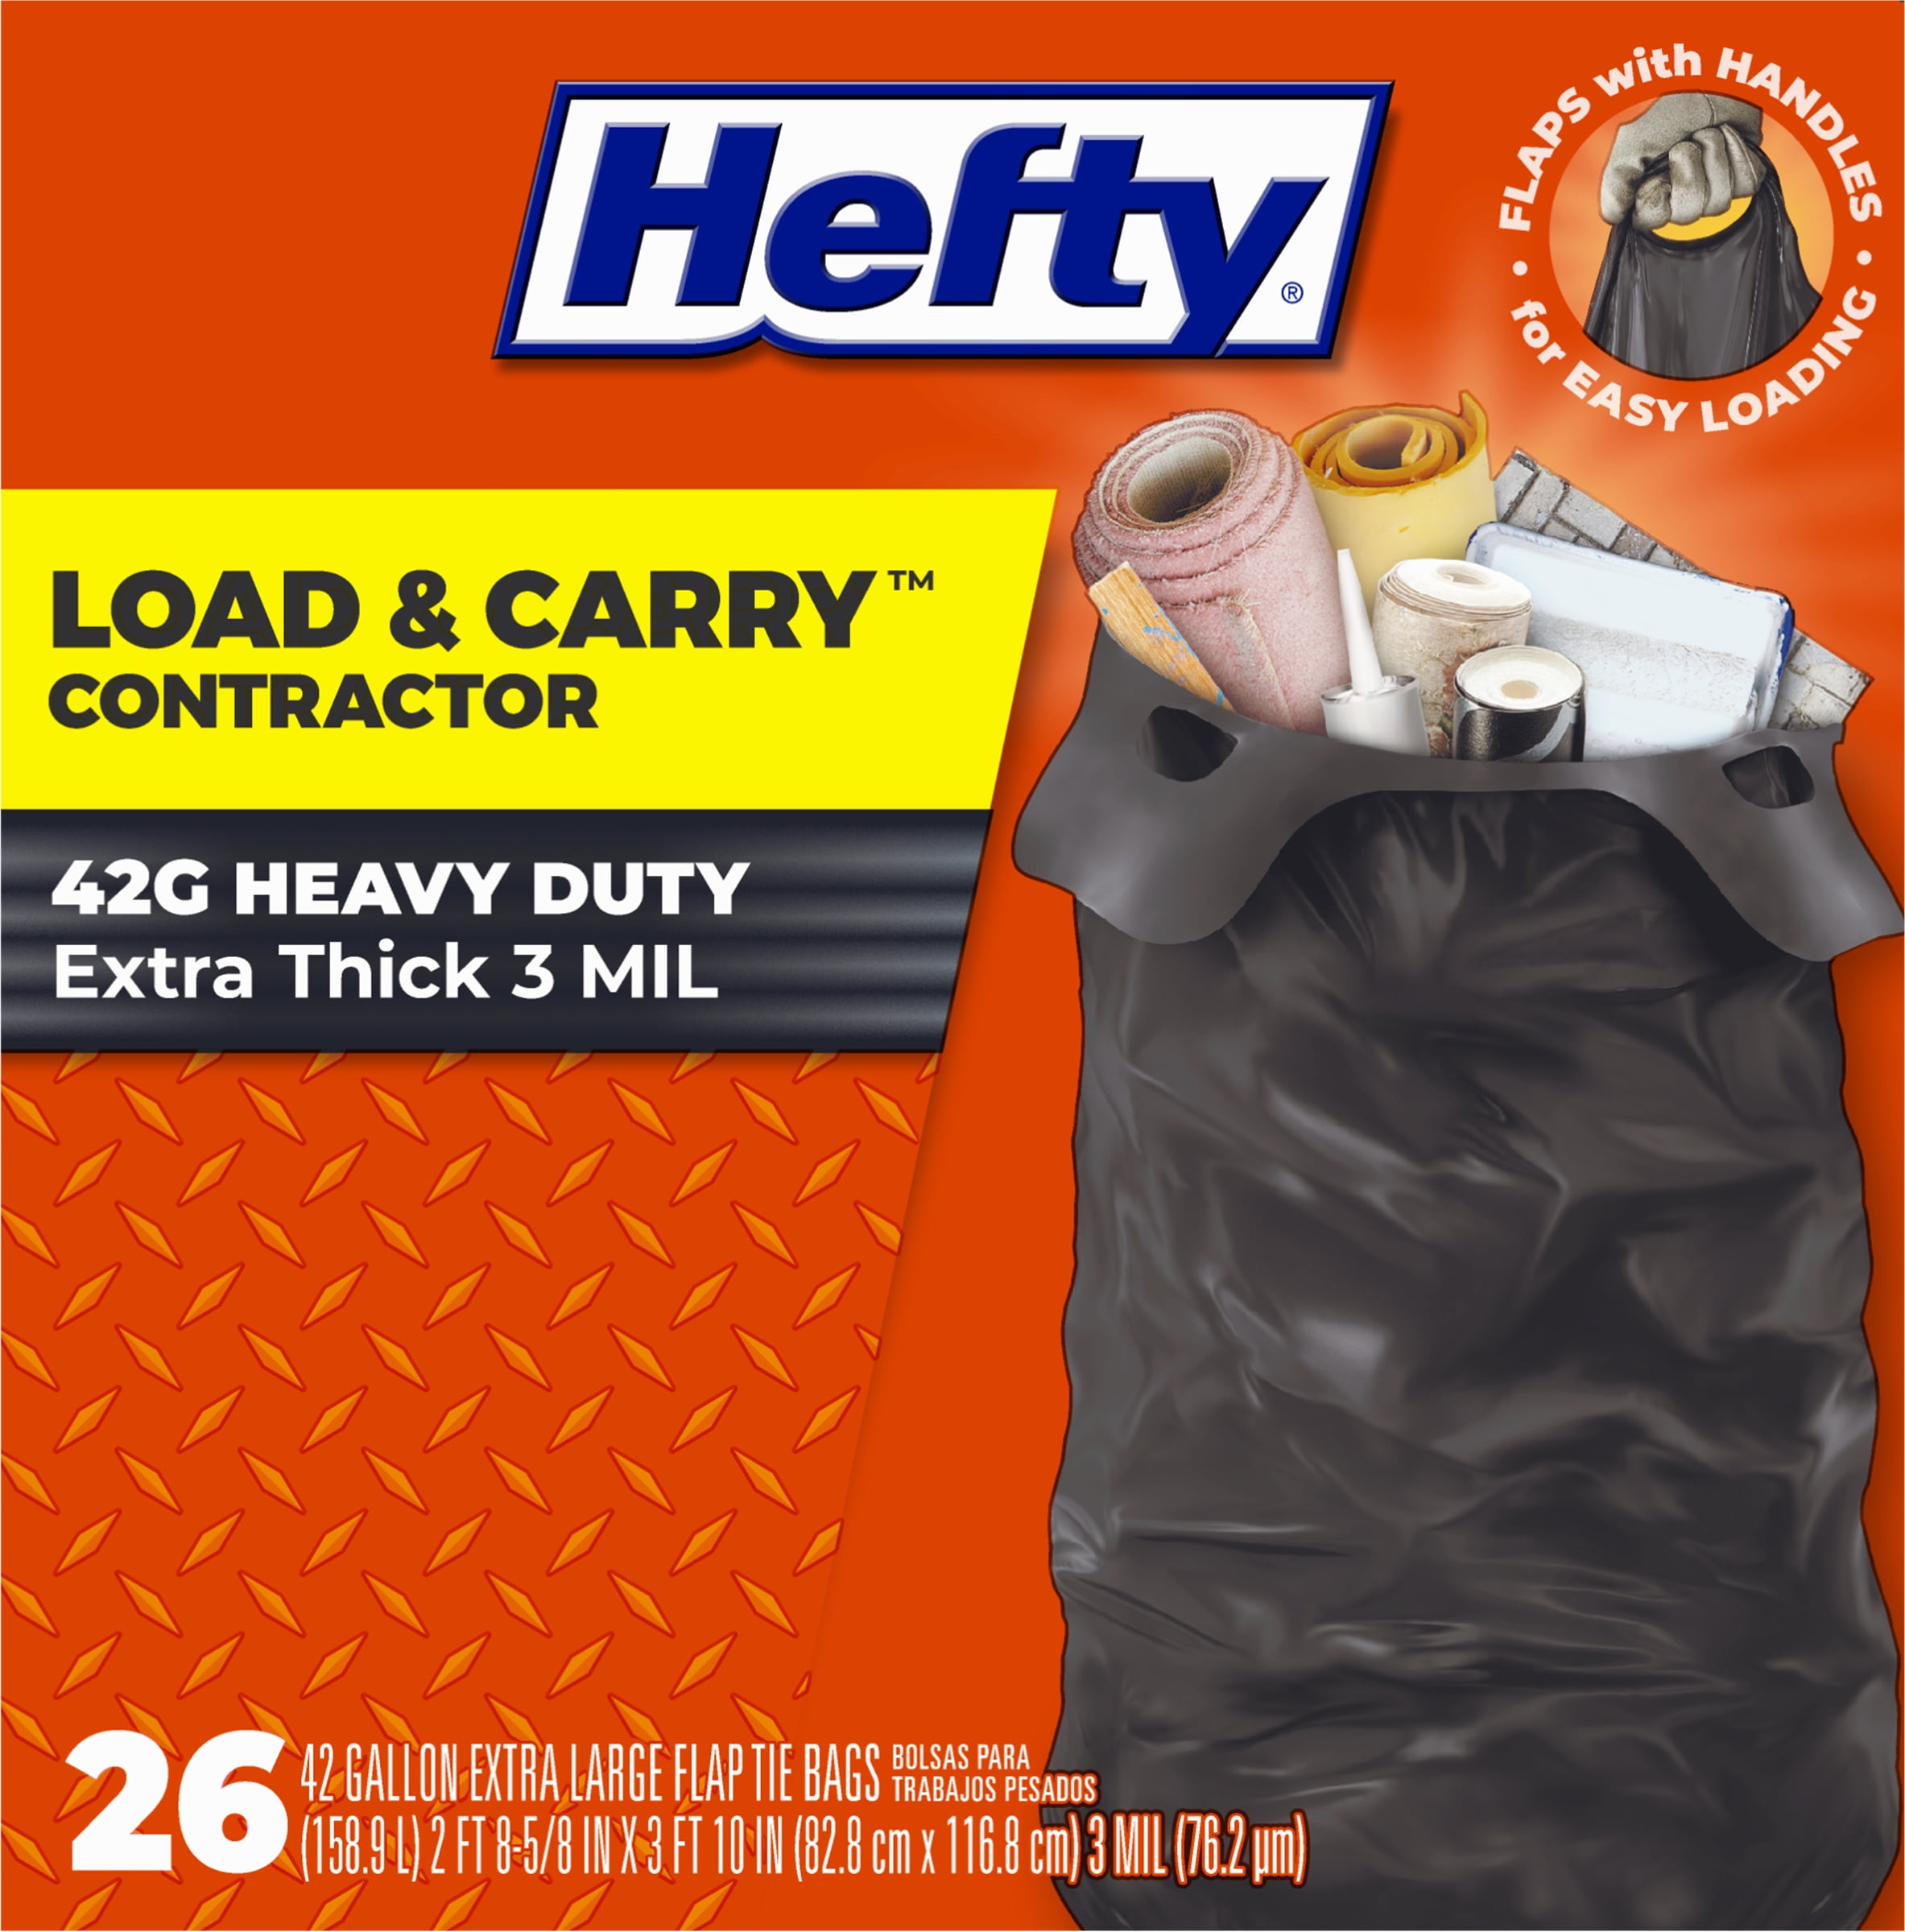 Hefty® Ultra Strong™ Large Trash Bags - Mechanicsburg, PA - Mechanicsburg  Agway